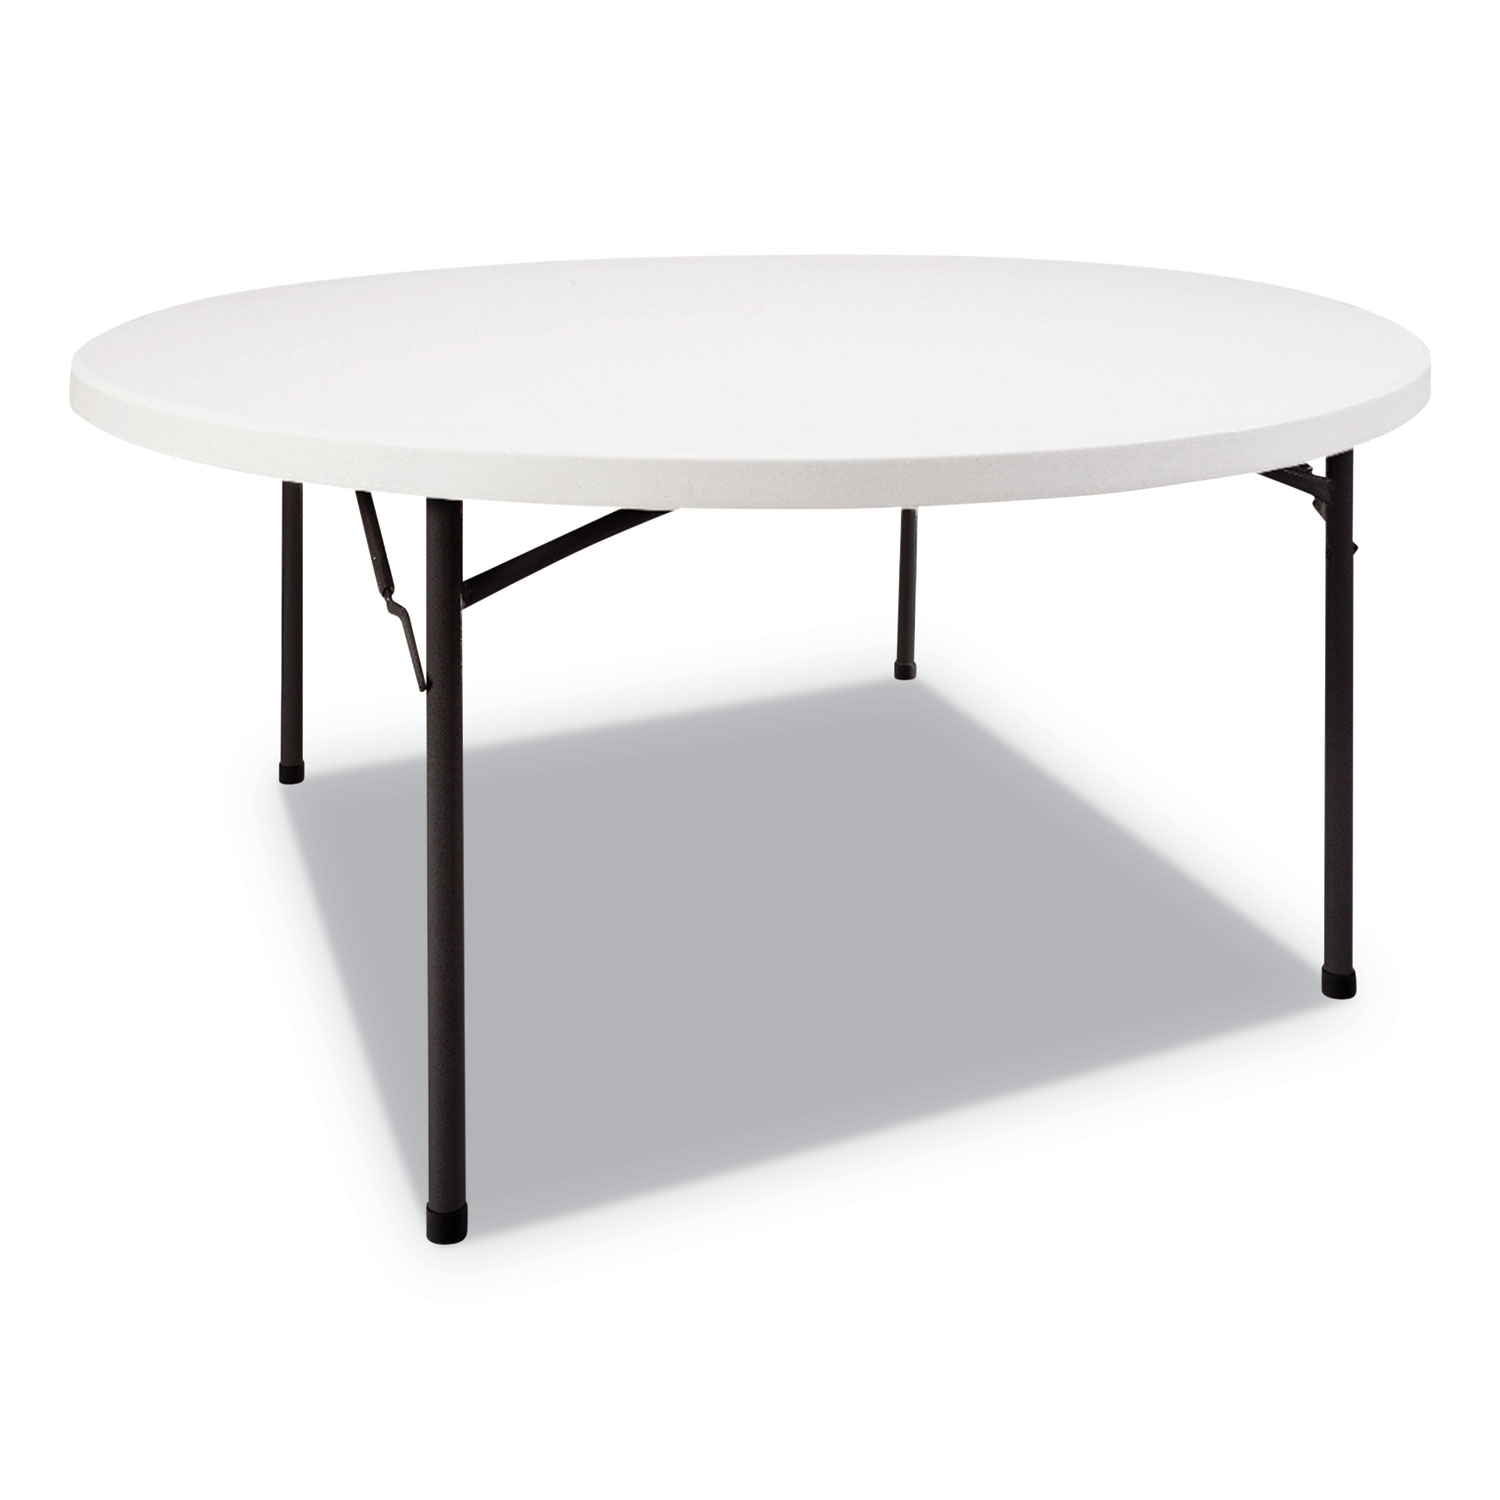  Alera ALEPT60RW Round Plastic Folding Table, 60 Dia x 29 1/4h, White (ALEPT60RW) 